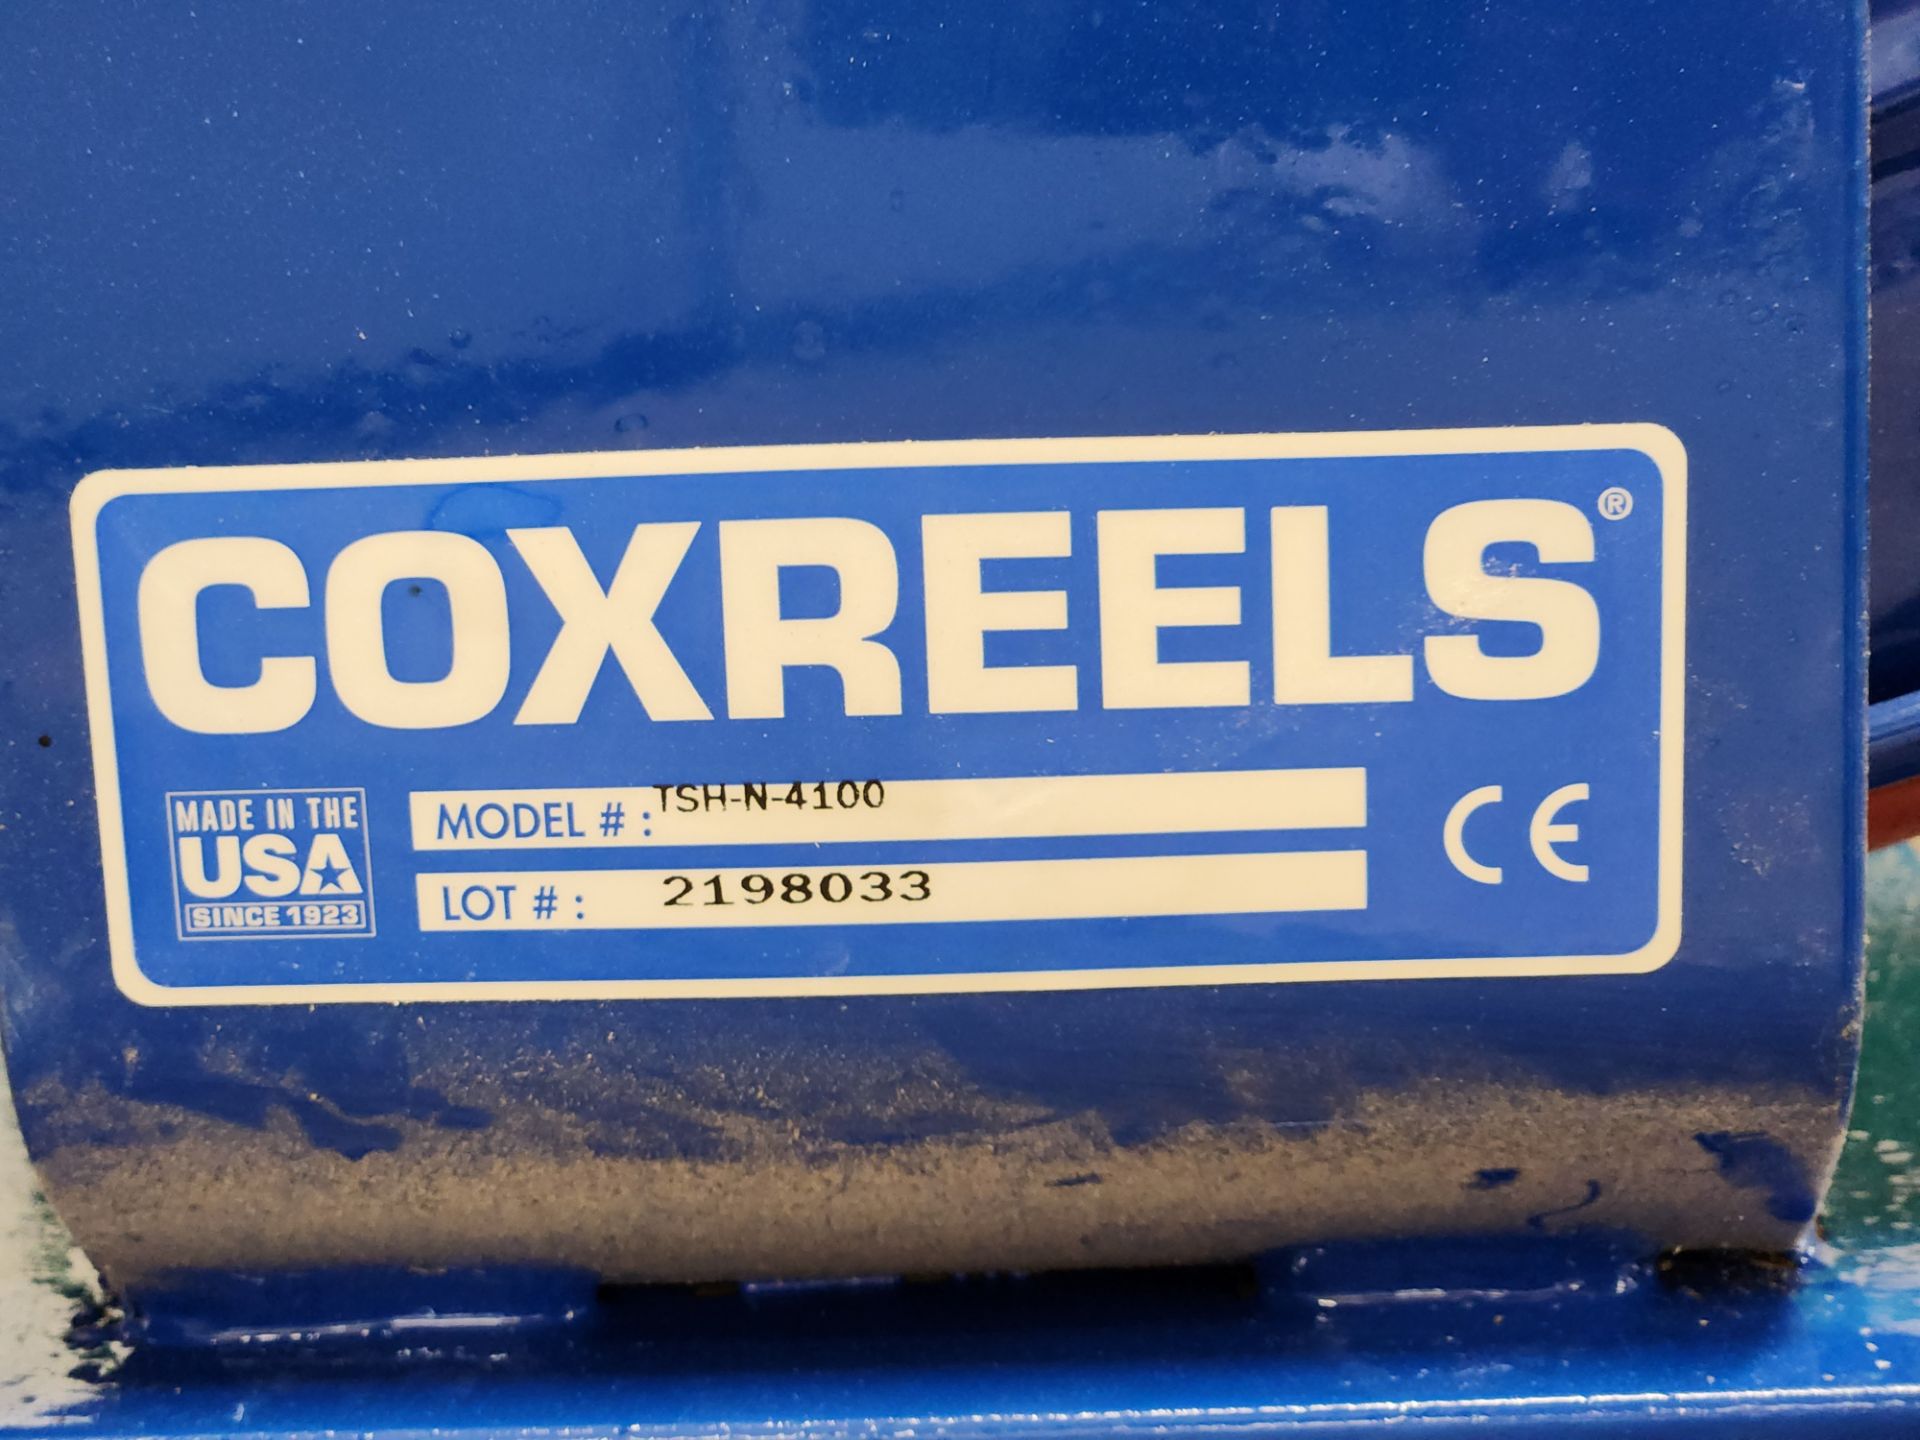 Coxreels Air Hose & Reel - Image 2 of 2